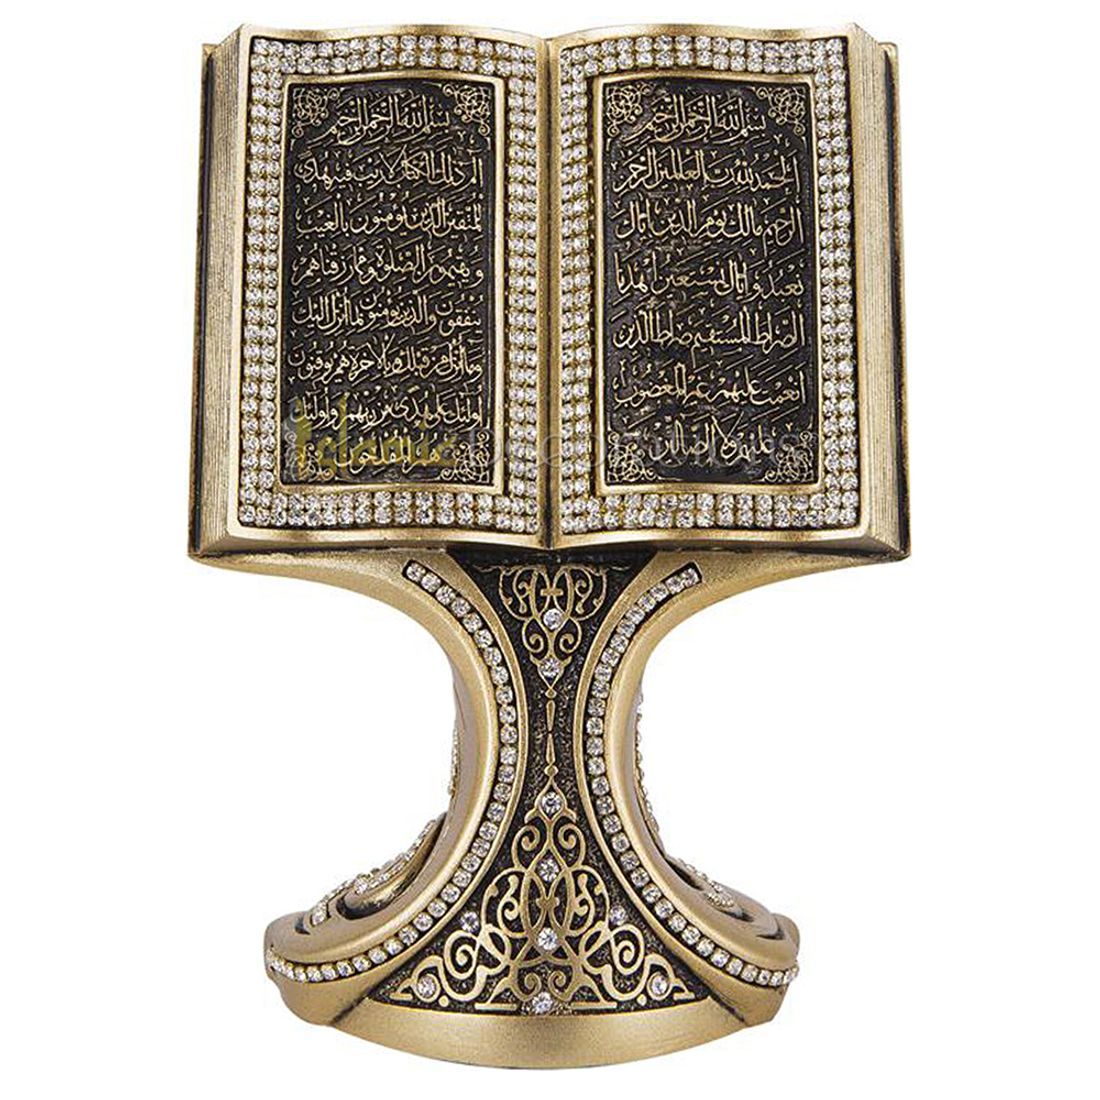 Quran Fatihah Baqarah Gold Book Clear Crystal 6-1/4 in Molded Ornament – Islamic Calligraphy Art